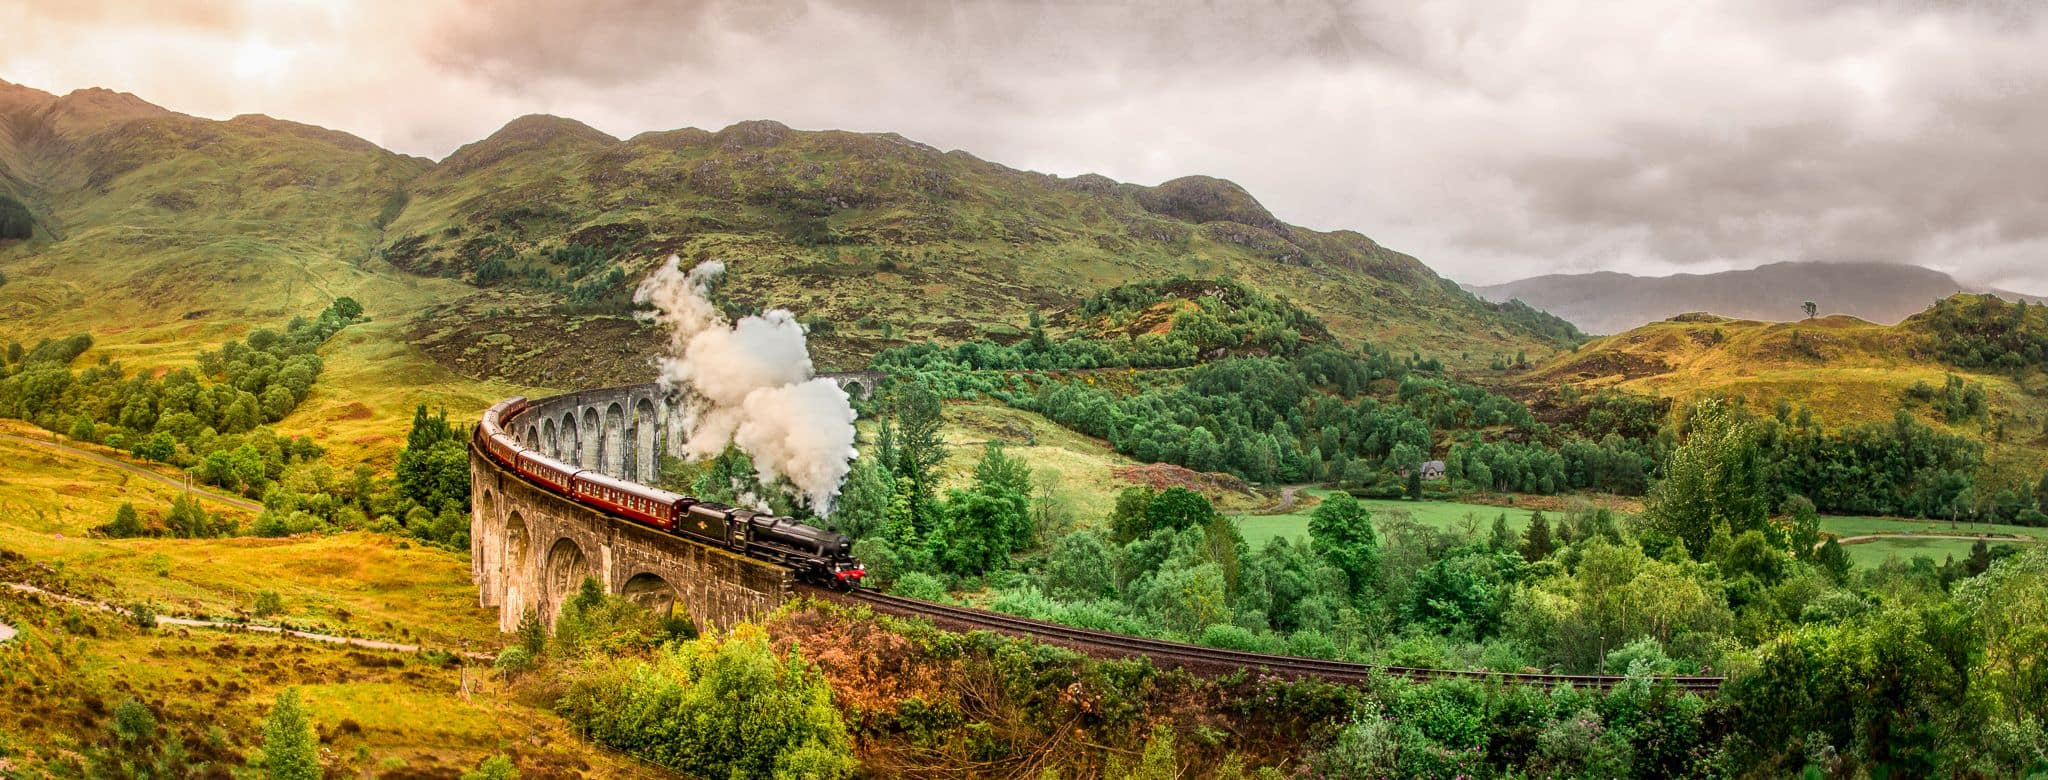 train trips around scotland